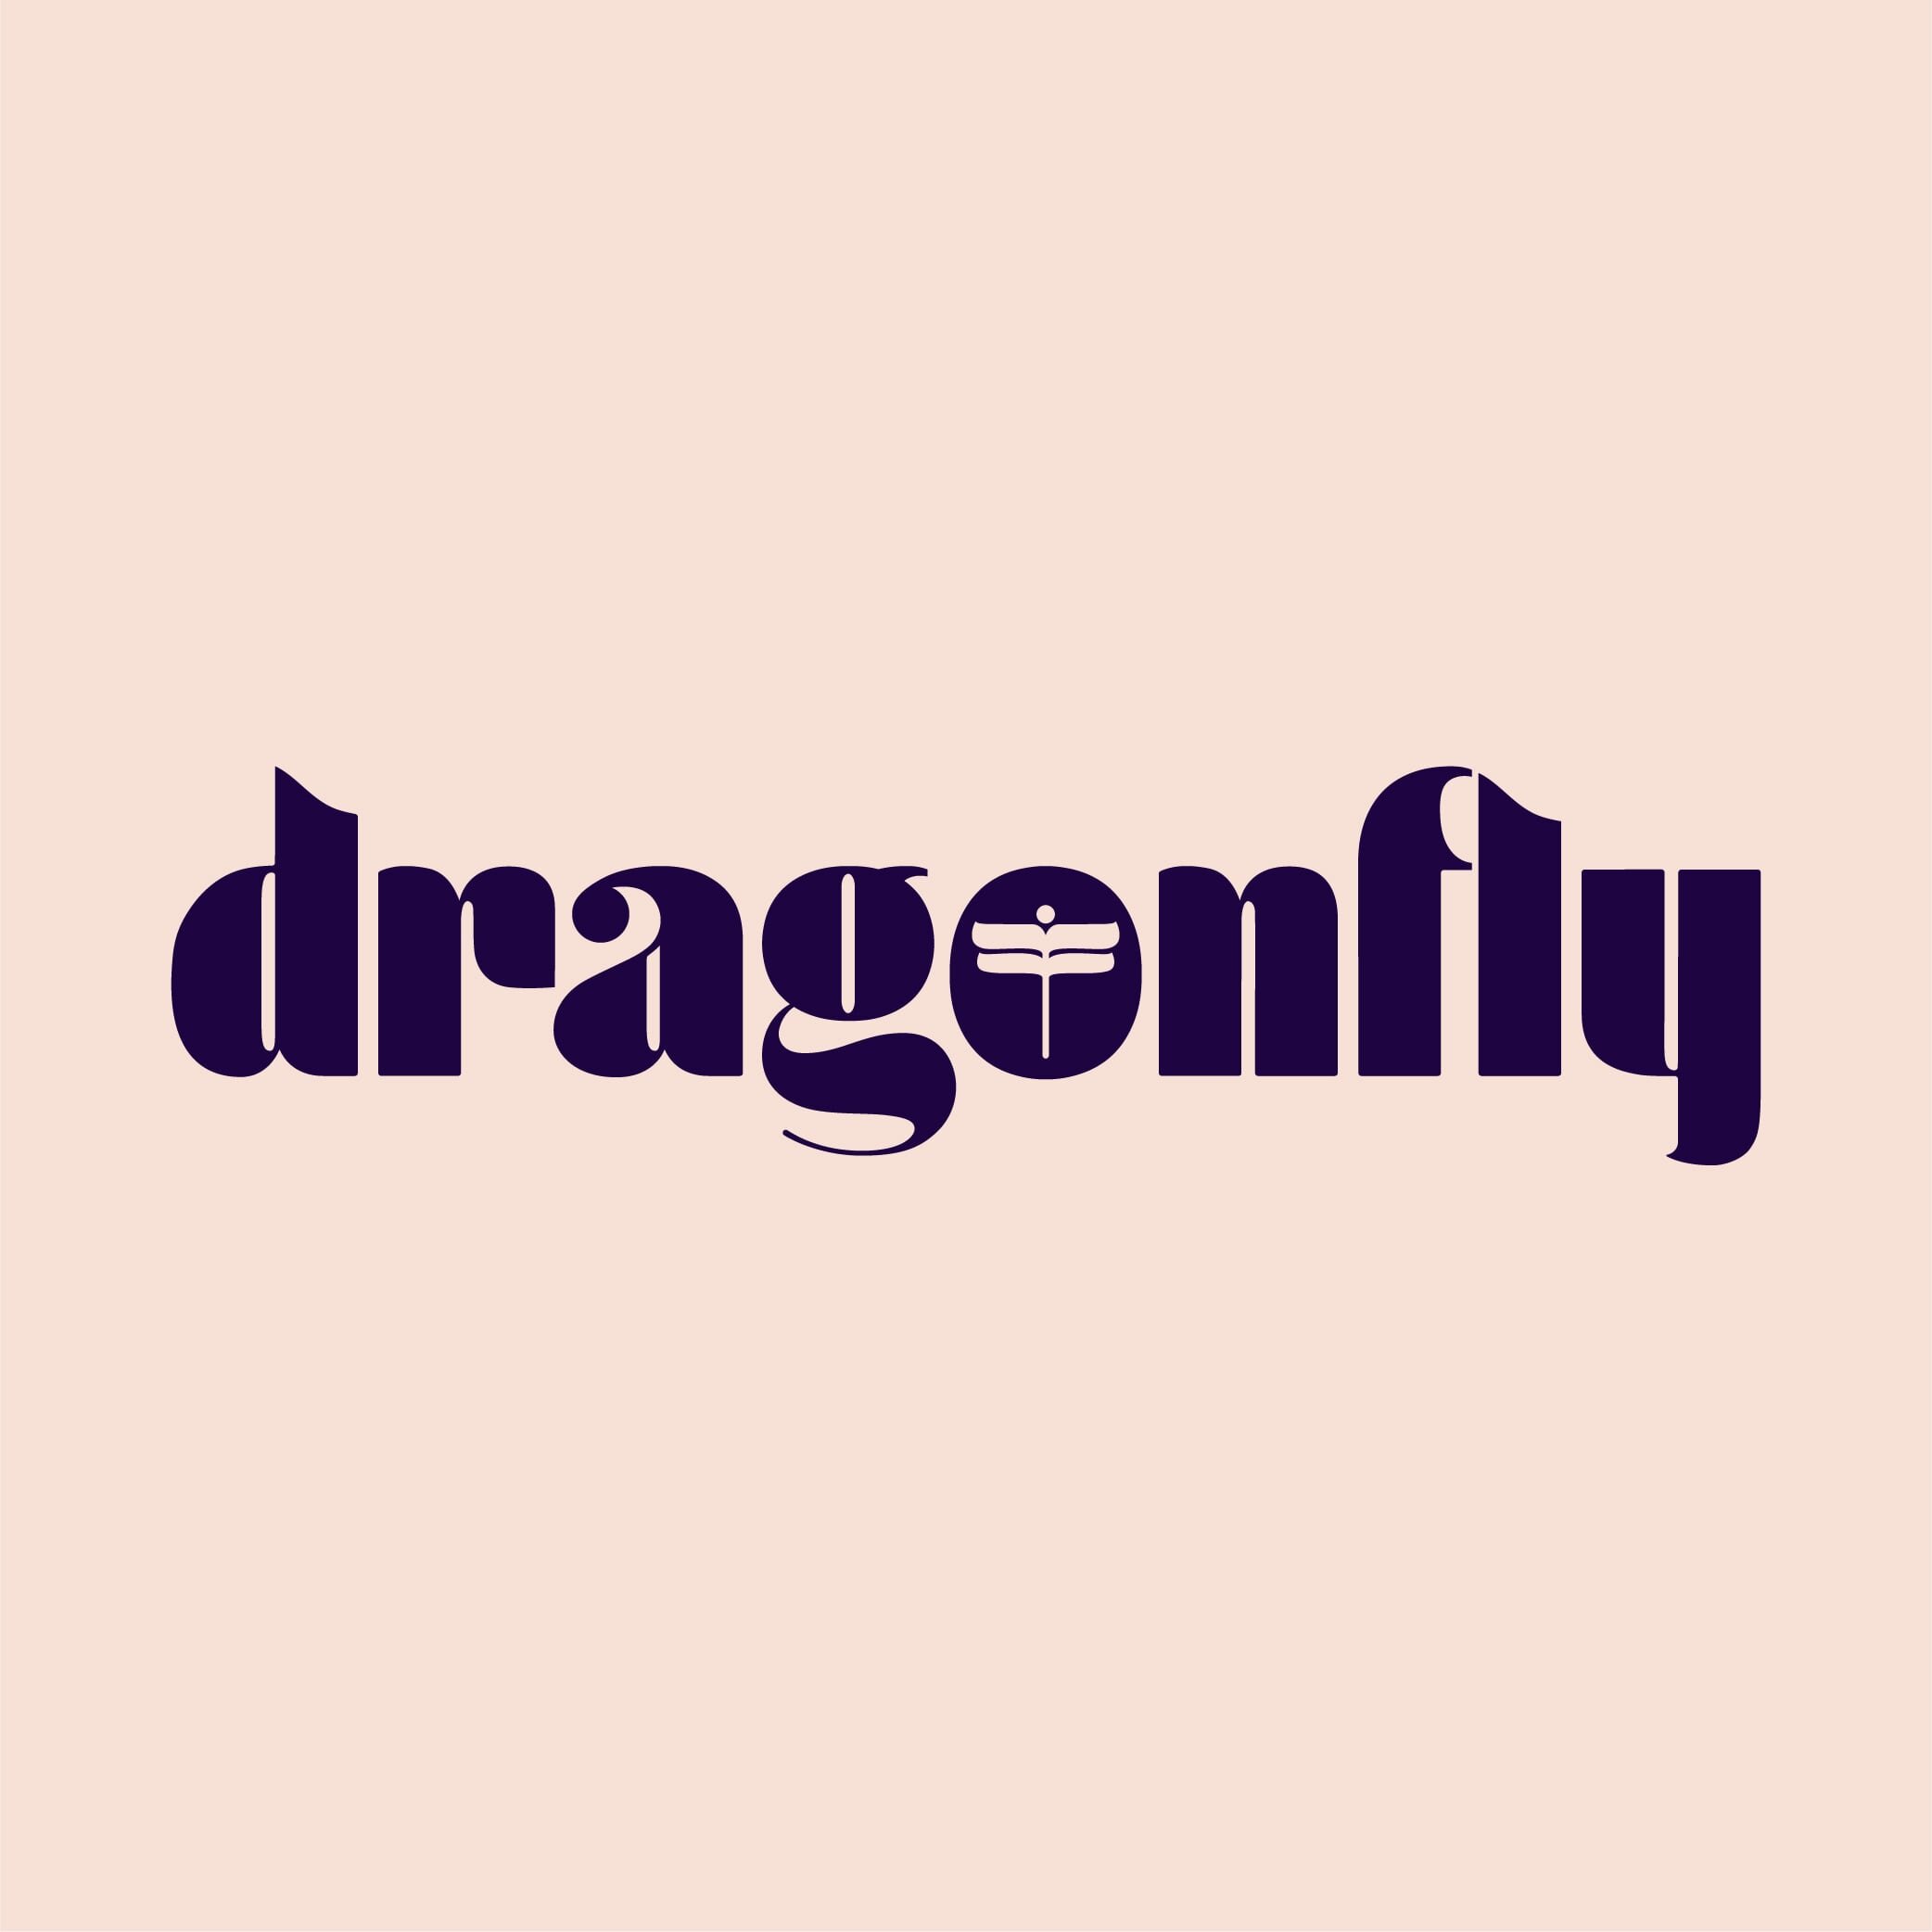 DF_logotype_dragonfly_8new.jpg